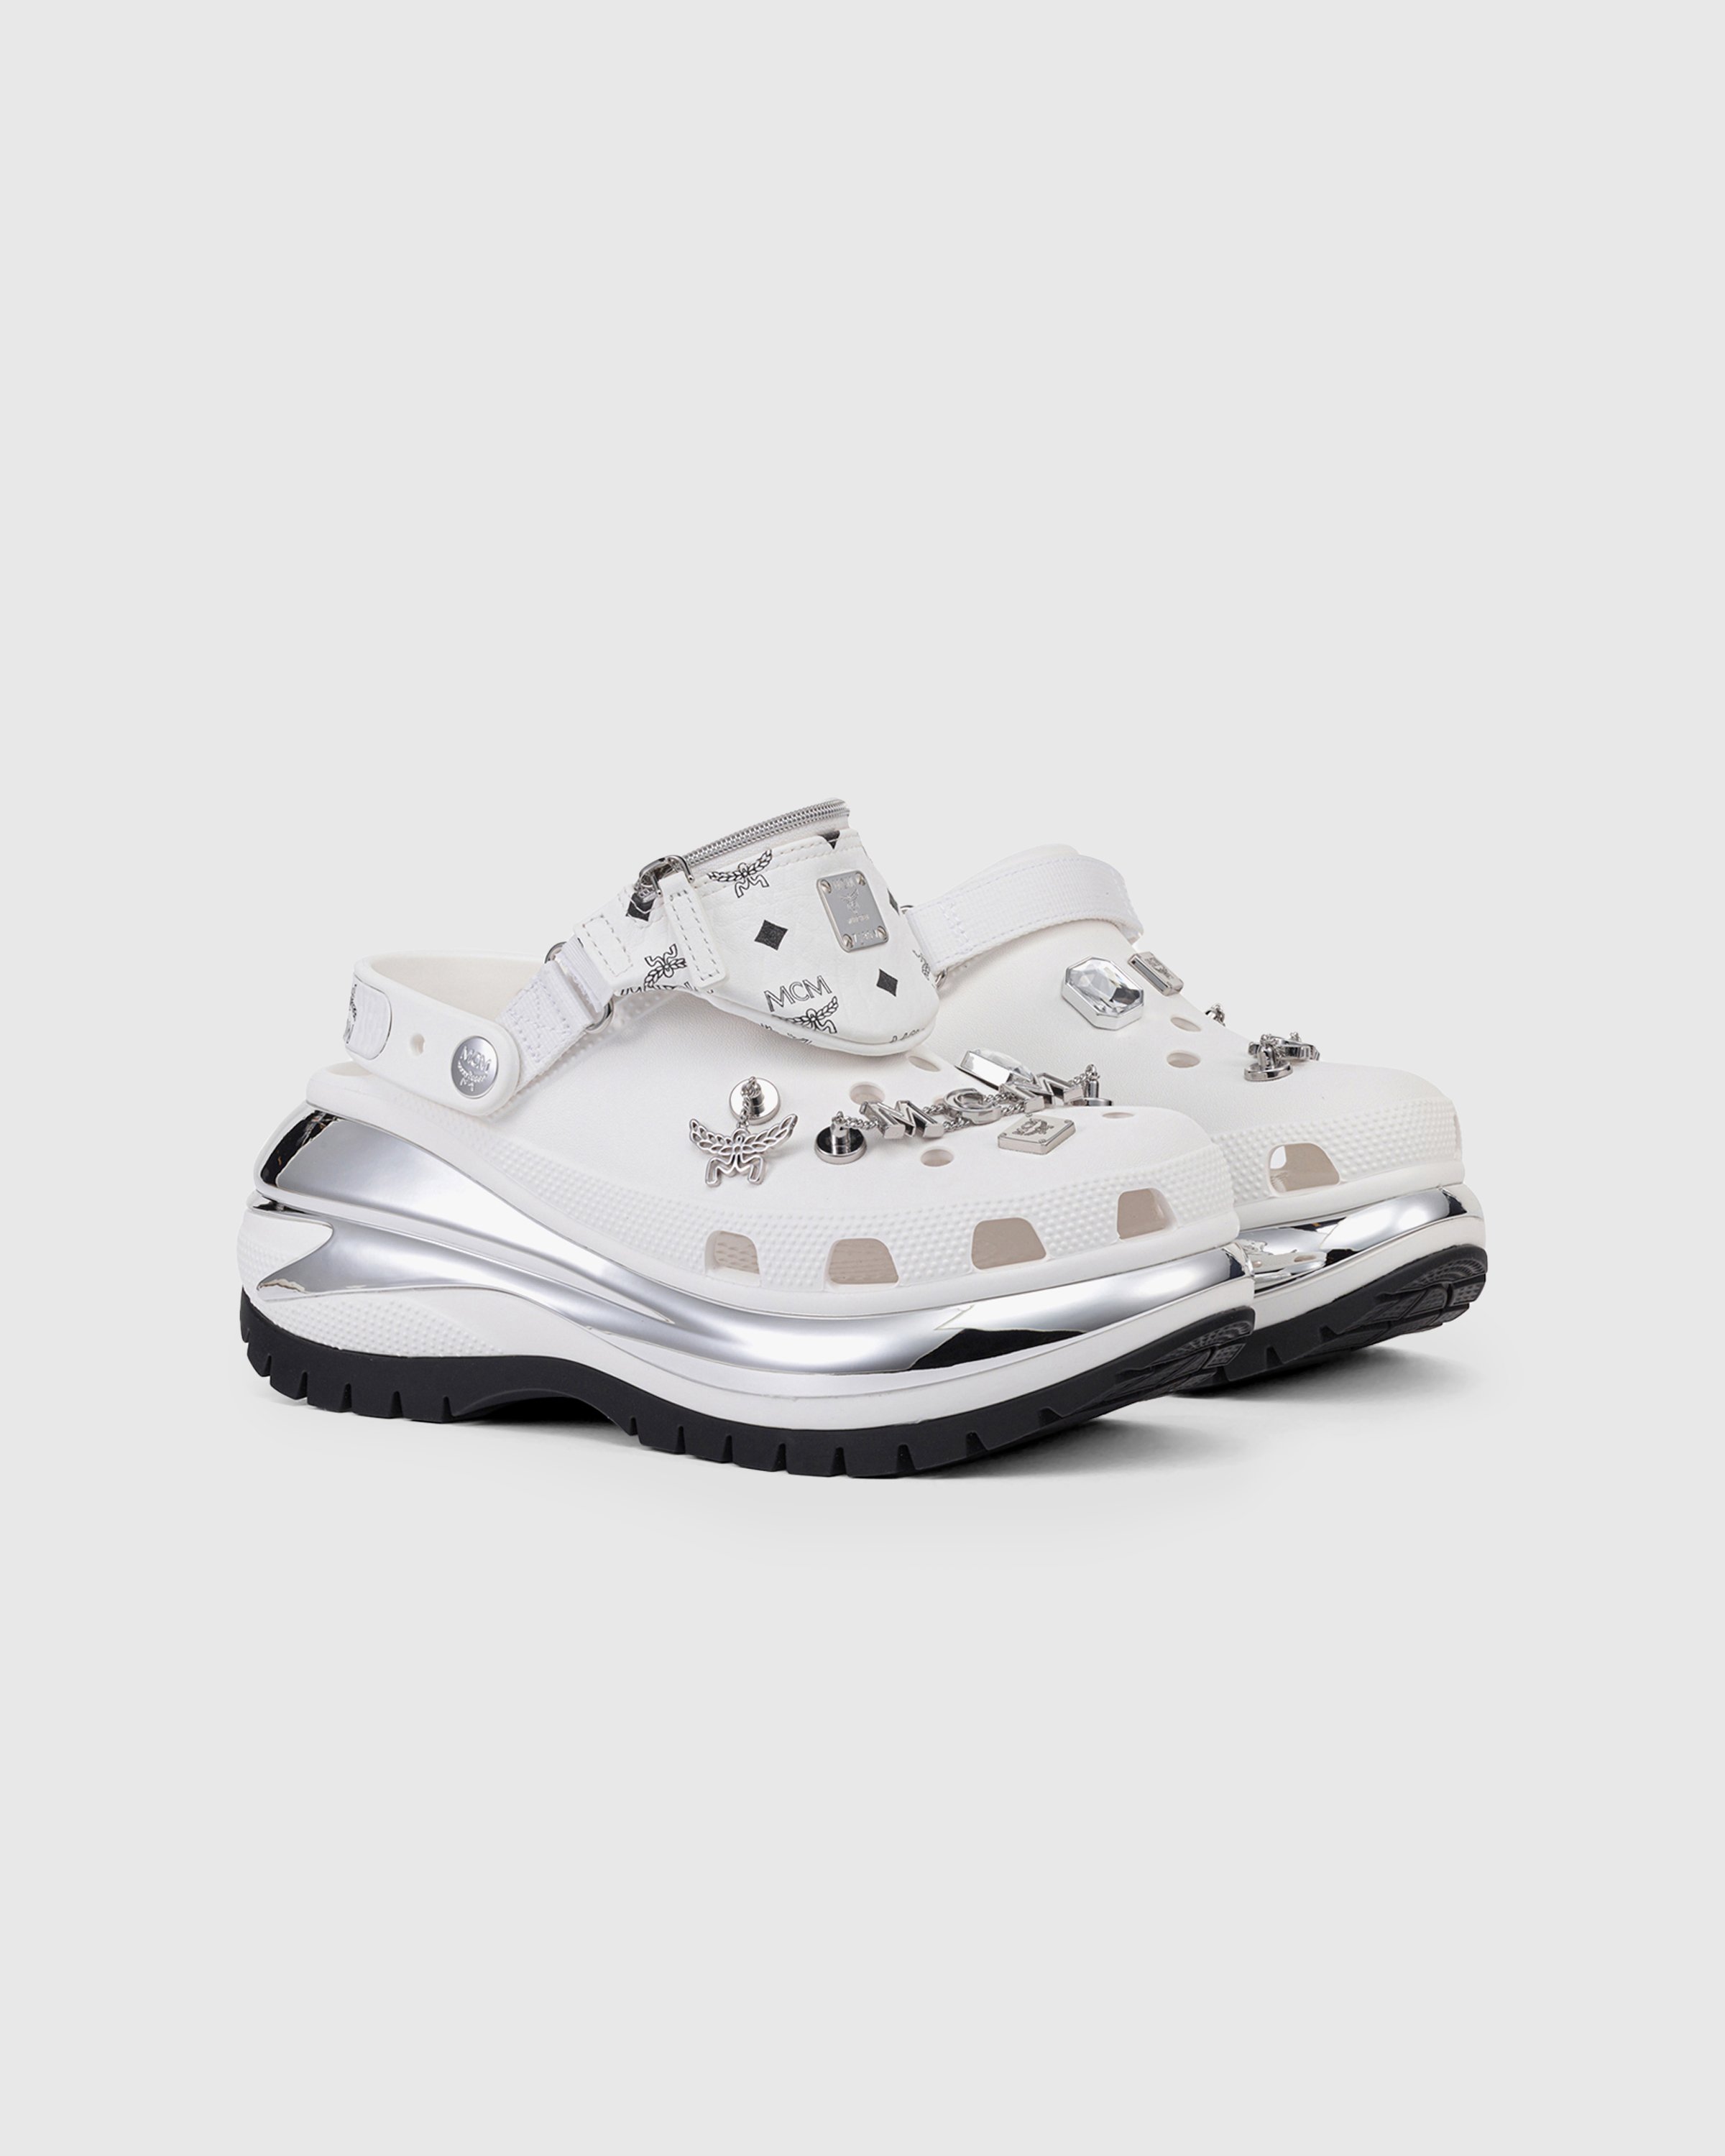 MCM x Crocs - MEGA CRUSH BB 365 White - Footwear - White - Image 3